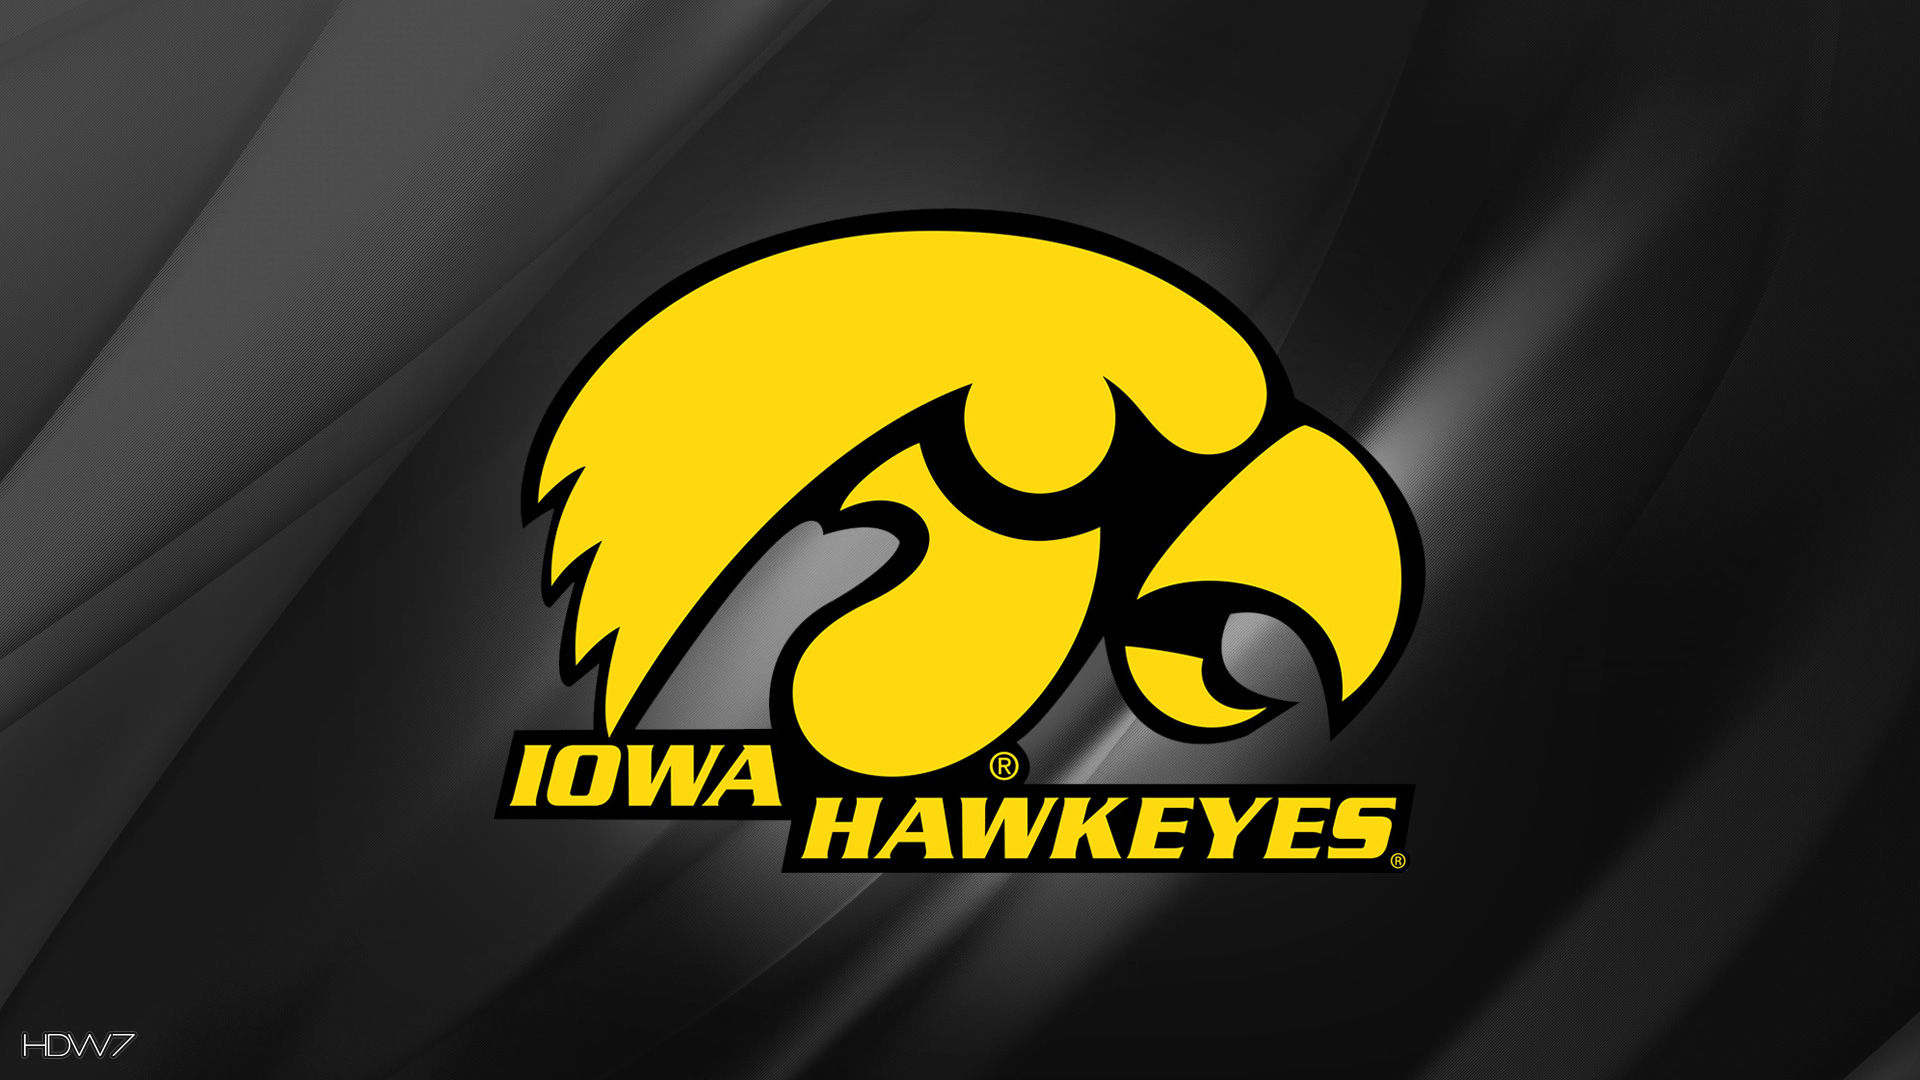 Wallpaper Name Iowa Hawkeyes Jpg Added May